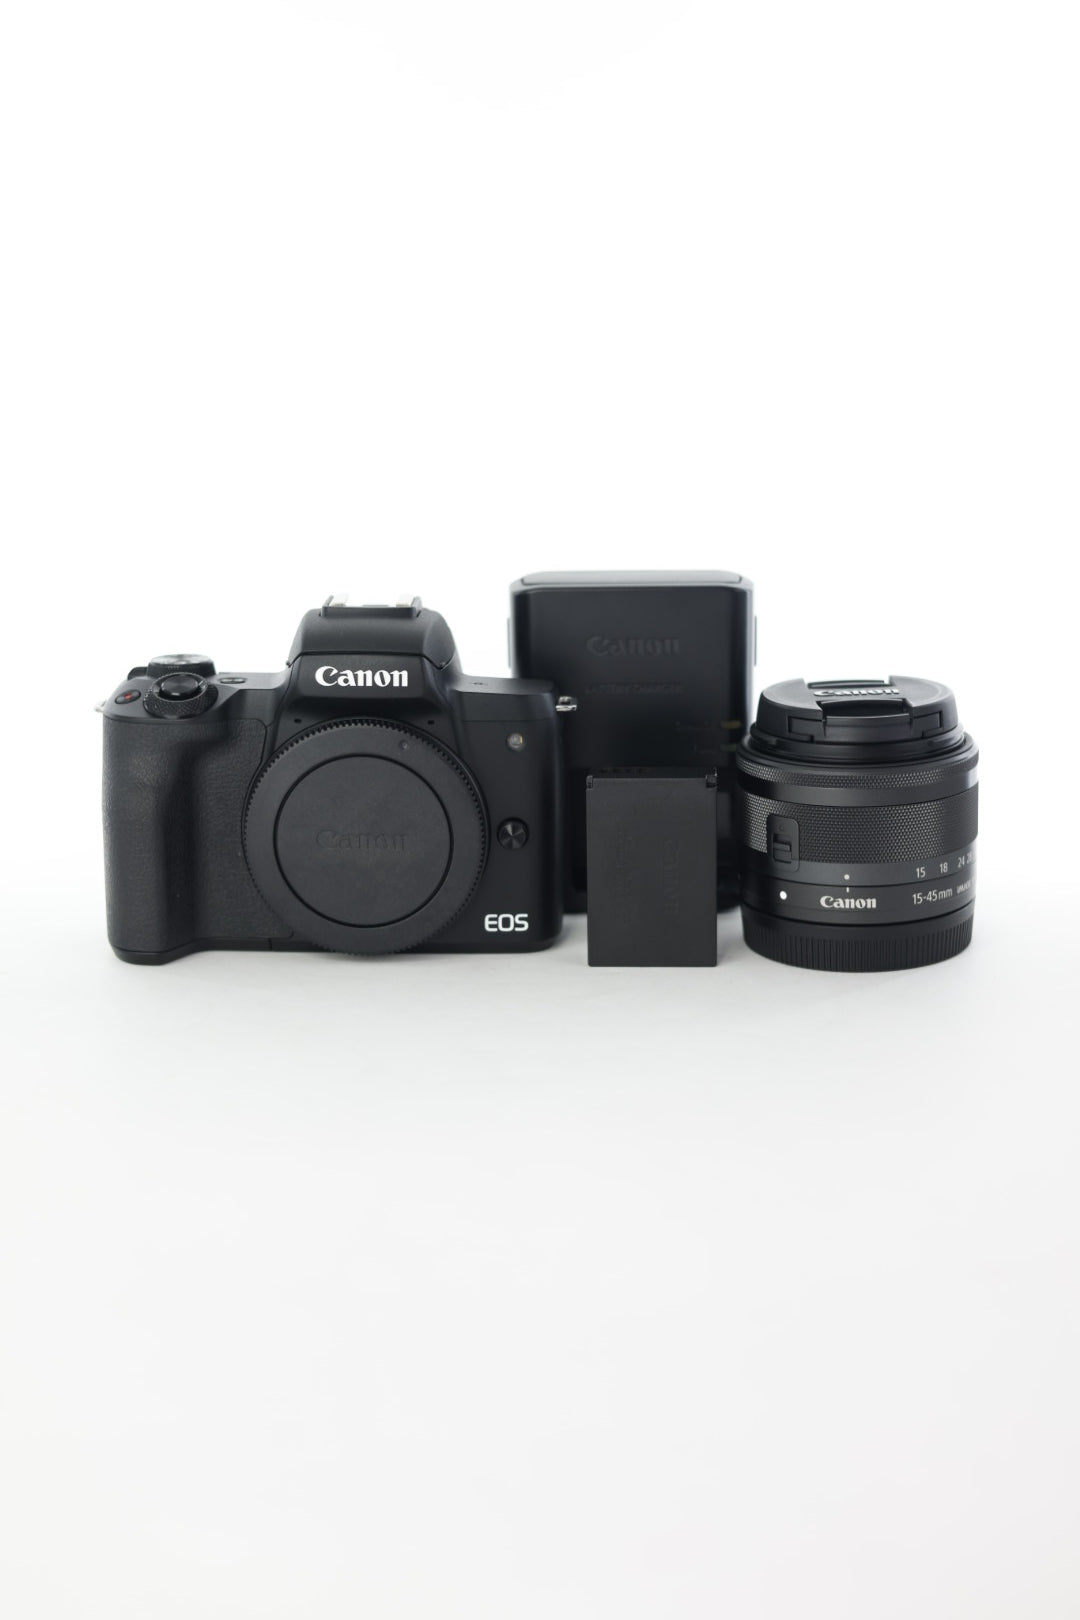 Canon M50IIB/1545/06239 EOS M50 Mark II + 15-45mm Lens, Black, Used